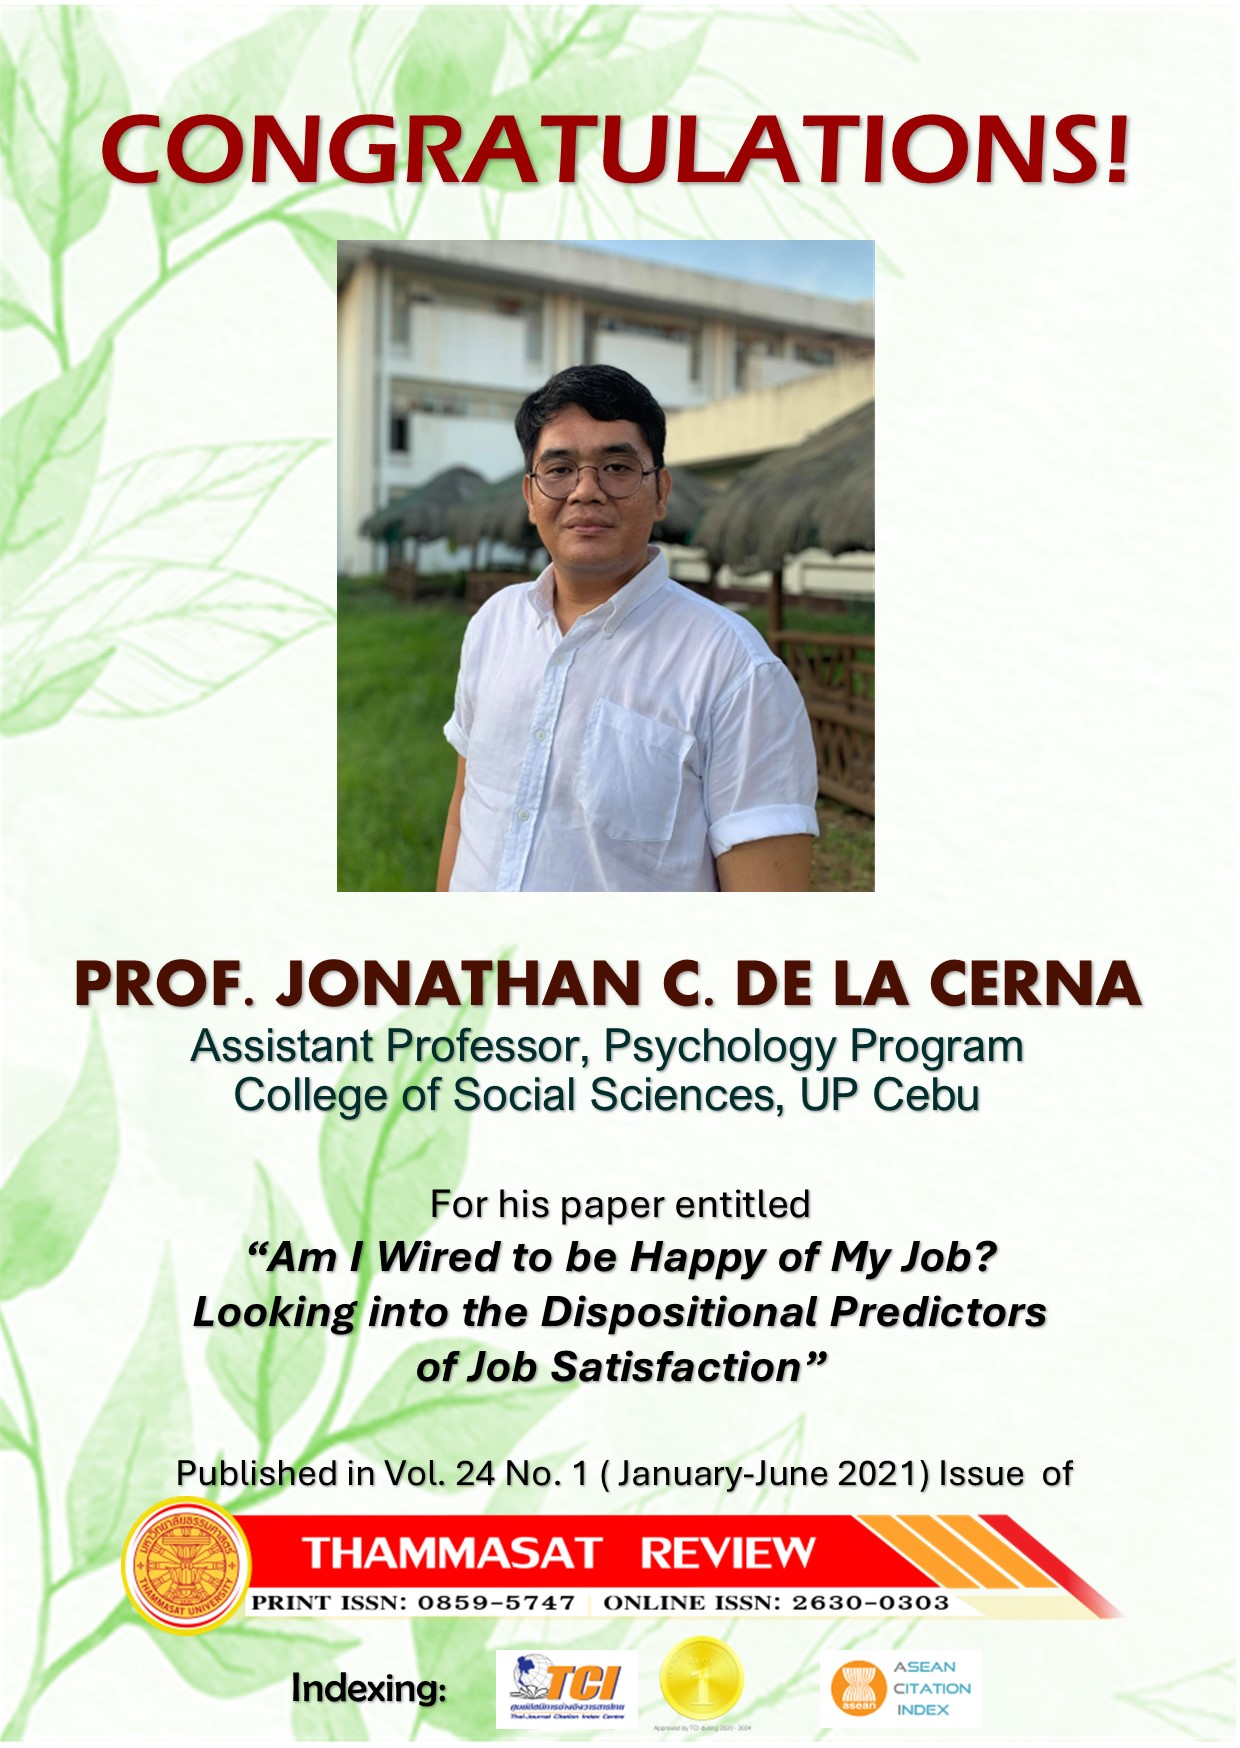 The College of Social Sciences Congratulates Asst. Prof. Jonathan de la Cerna for His Recent Publication